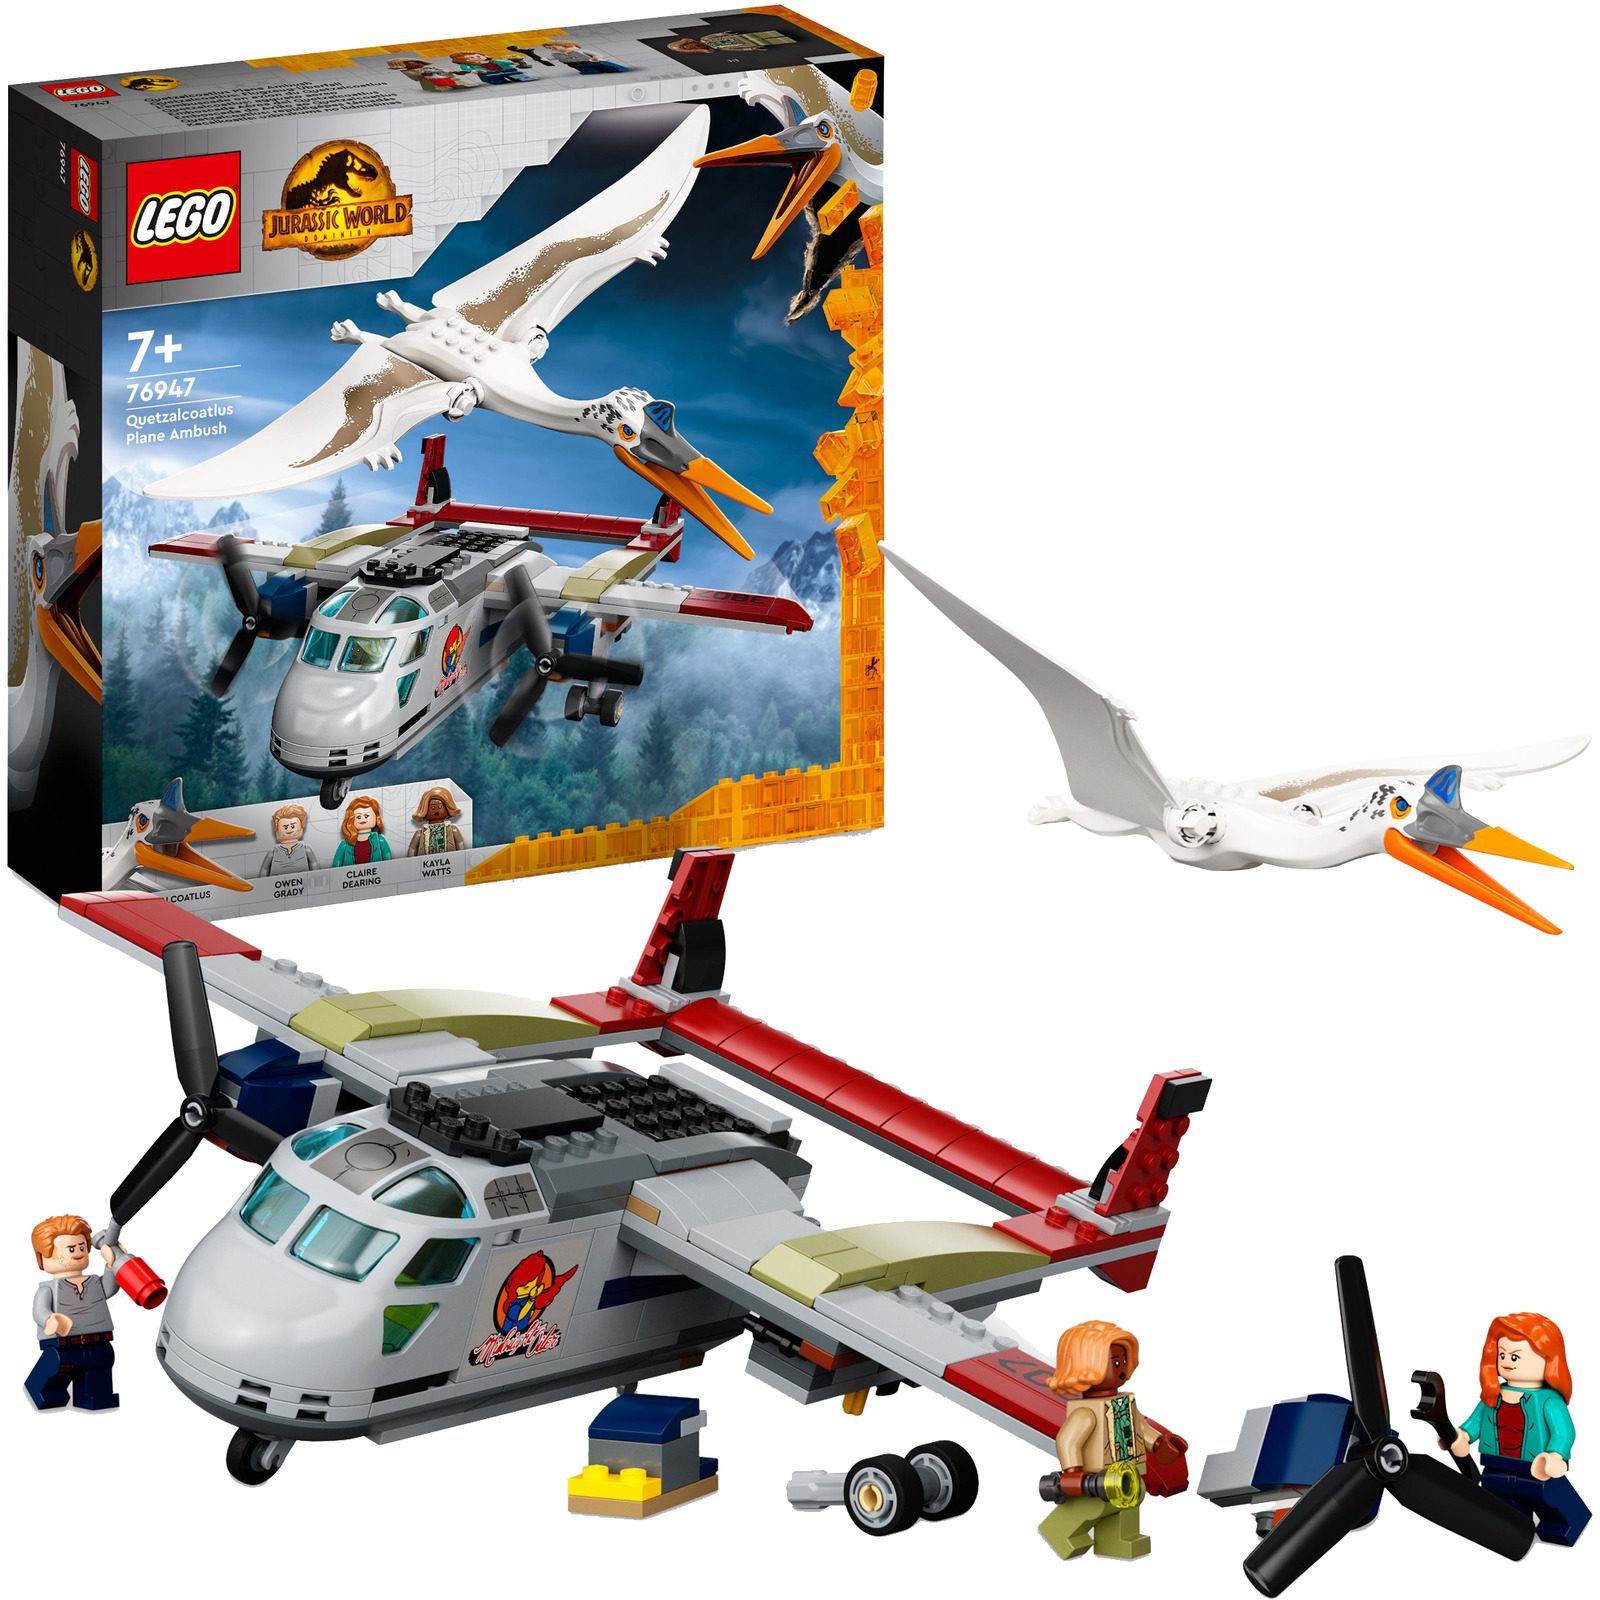 LEGO 76947 Jurassic World Quetzalcoatlus Plane Heist Construction Toy LEGO konstruktors